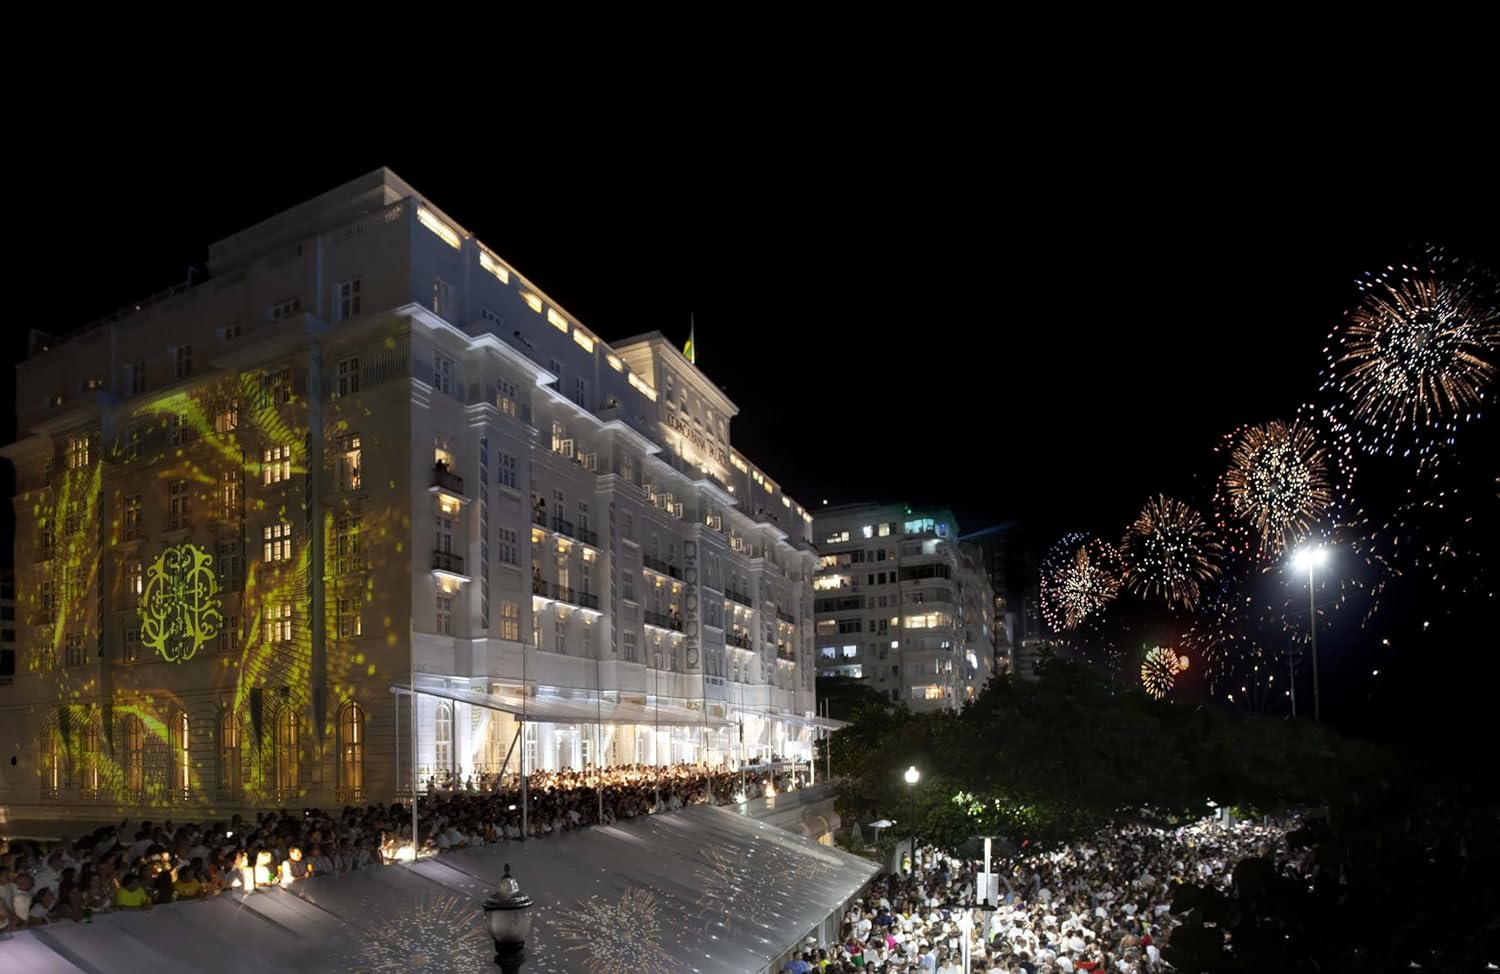 Copacabana Palace: Where Rio Starts